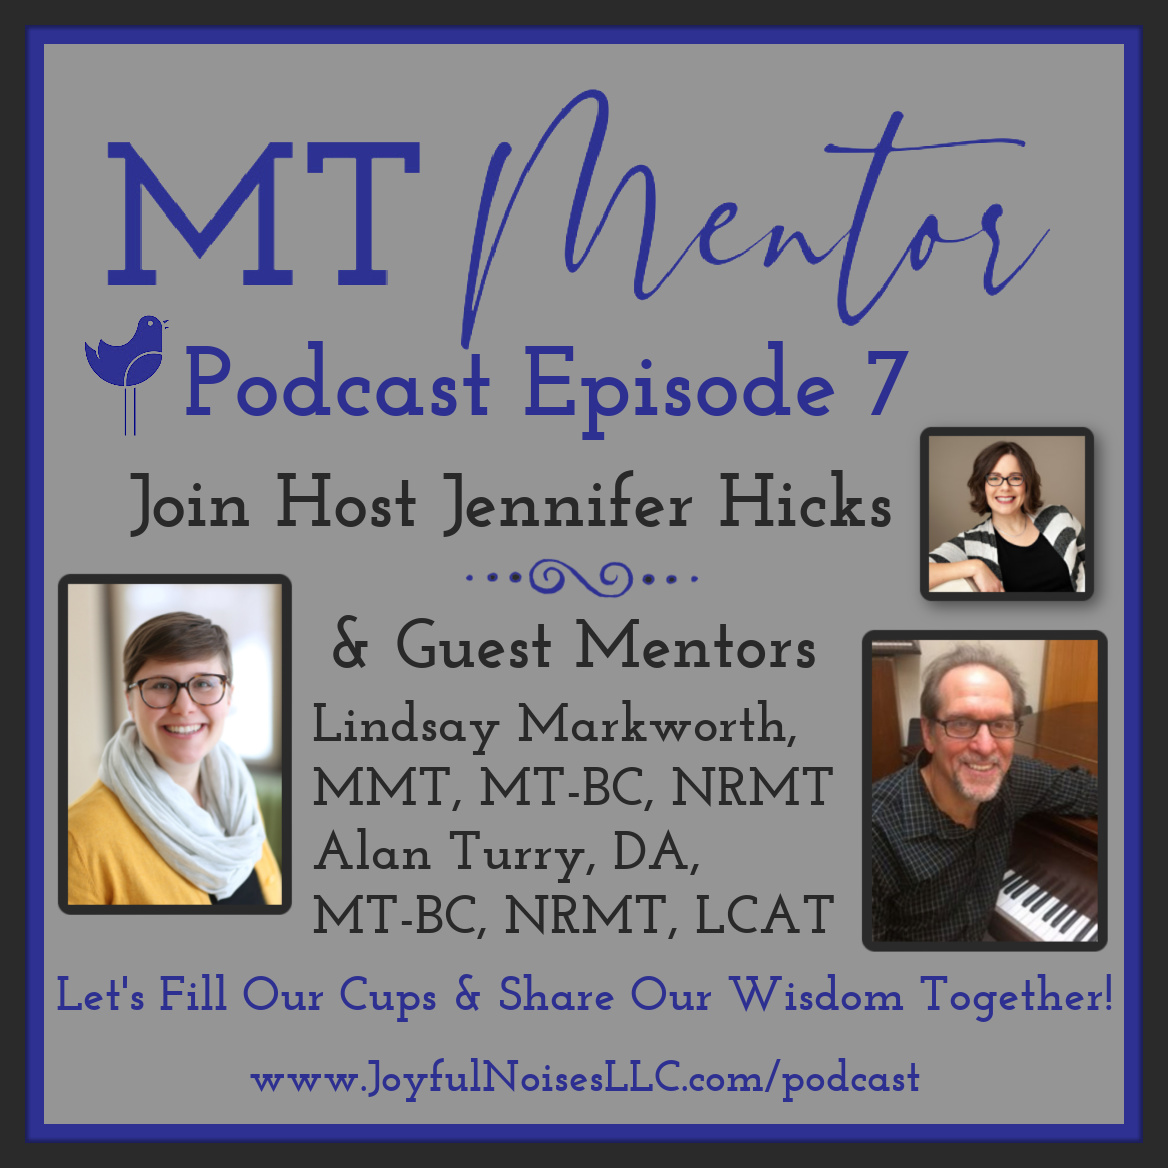 MT Mentor Podcast: Episode 7 with Guest Mentors Lindsay Markworth, MMT, MT-BC, NRMT Dr. Alan Turry, DA, MT-BC, NRMT, LCAT - Joyful Noises LLC